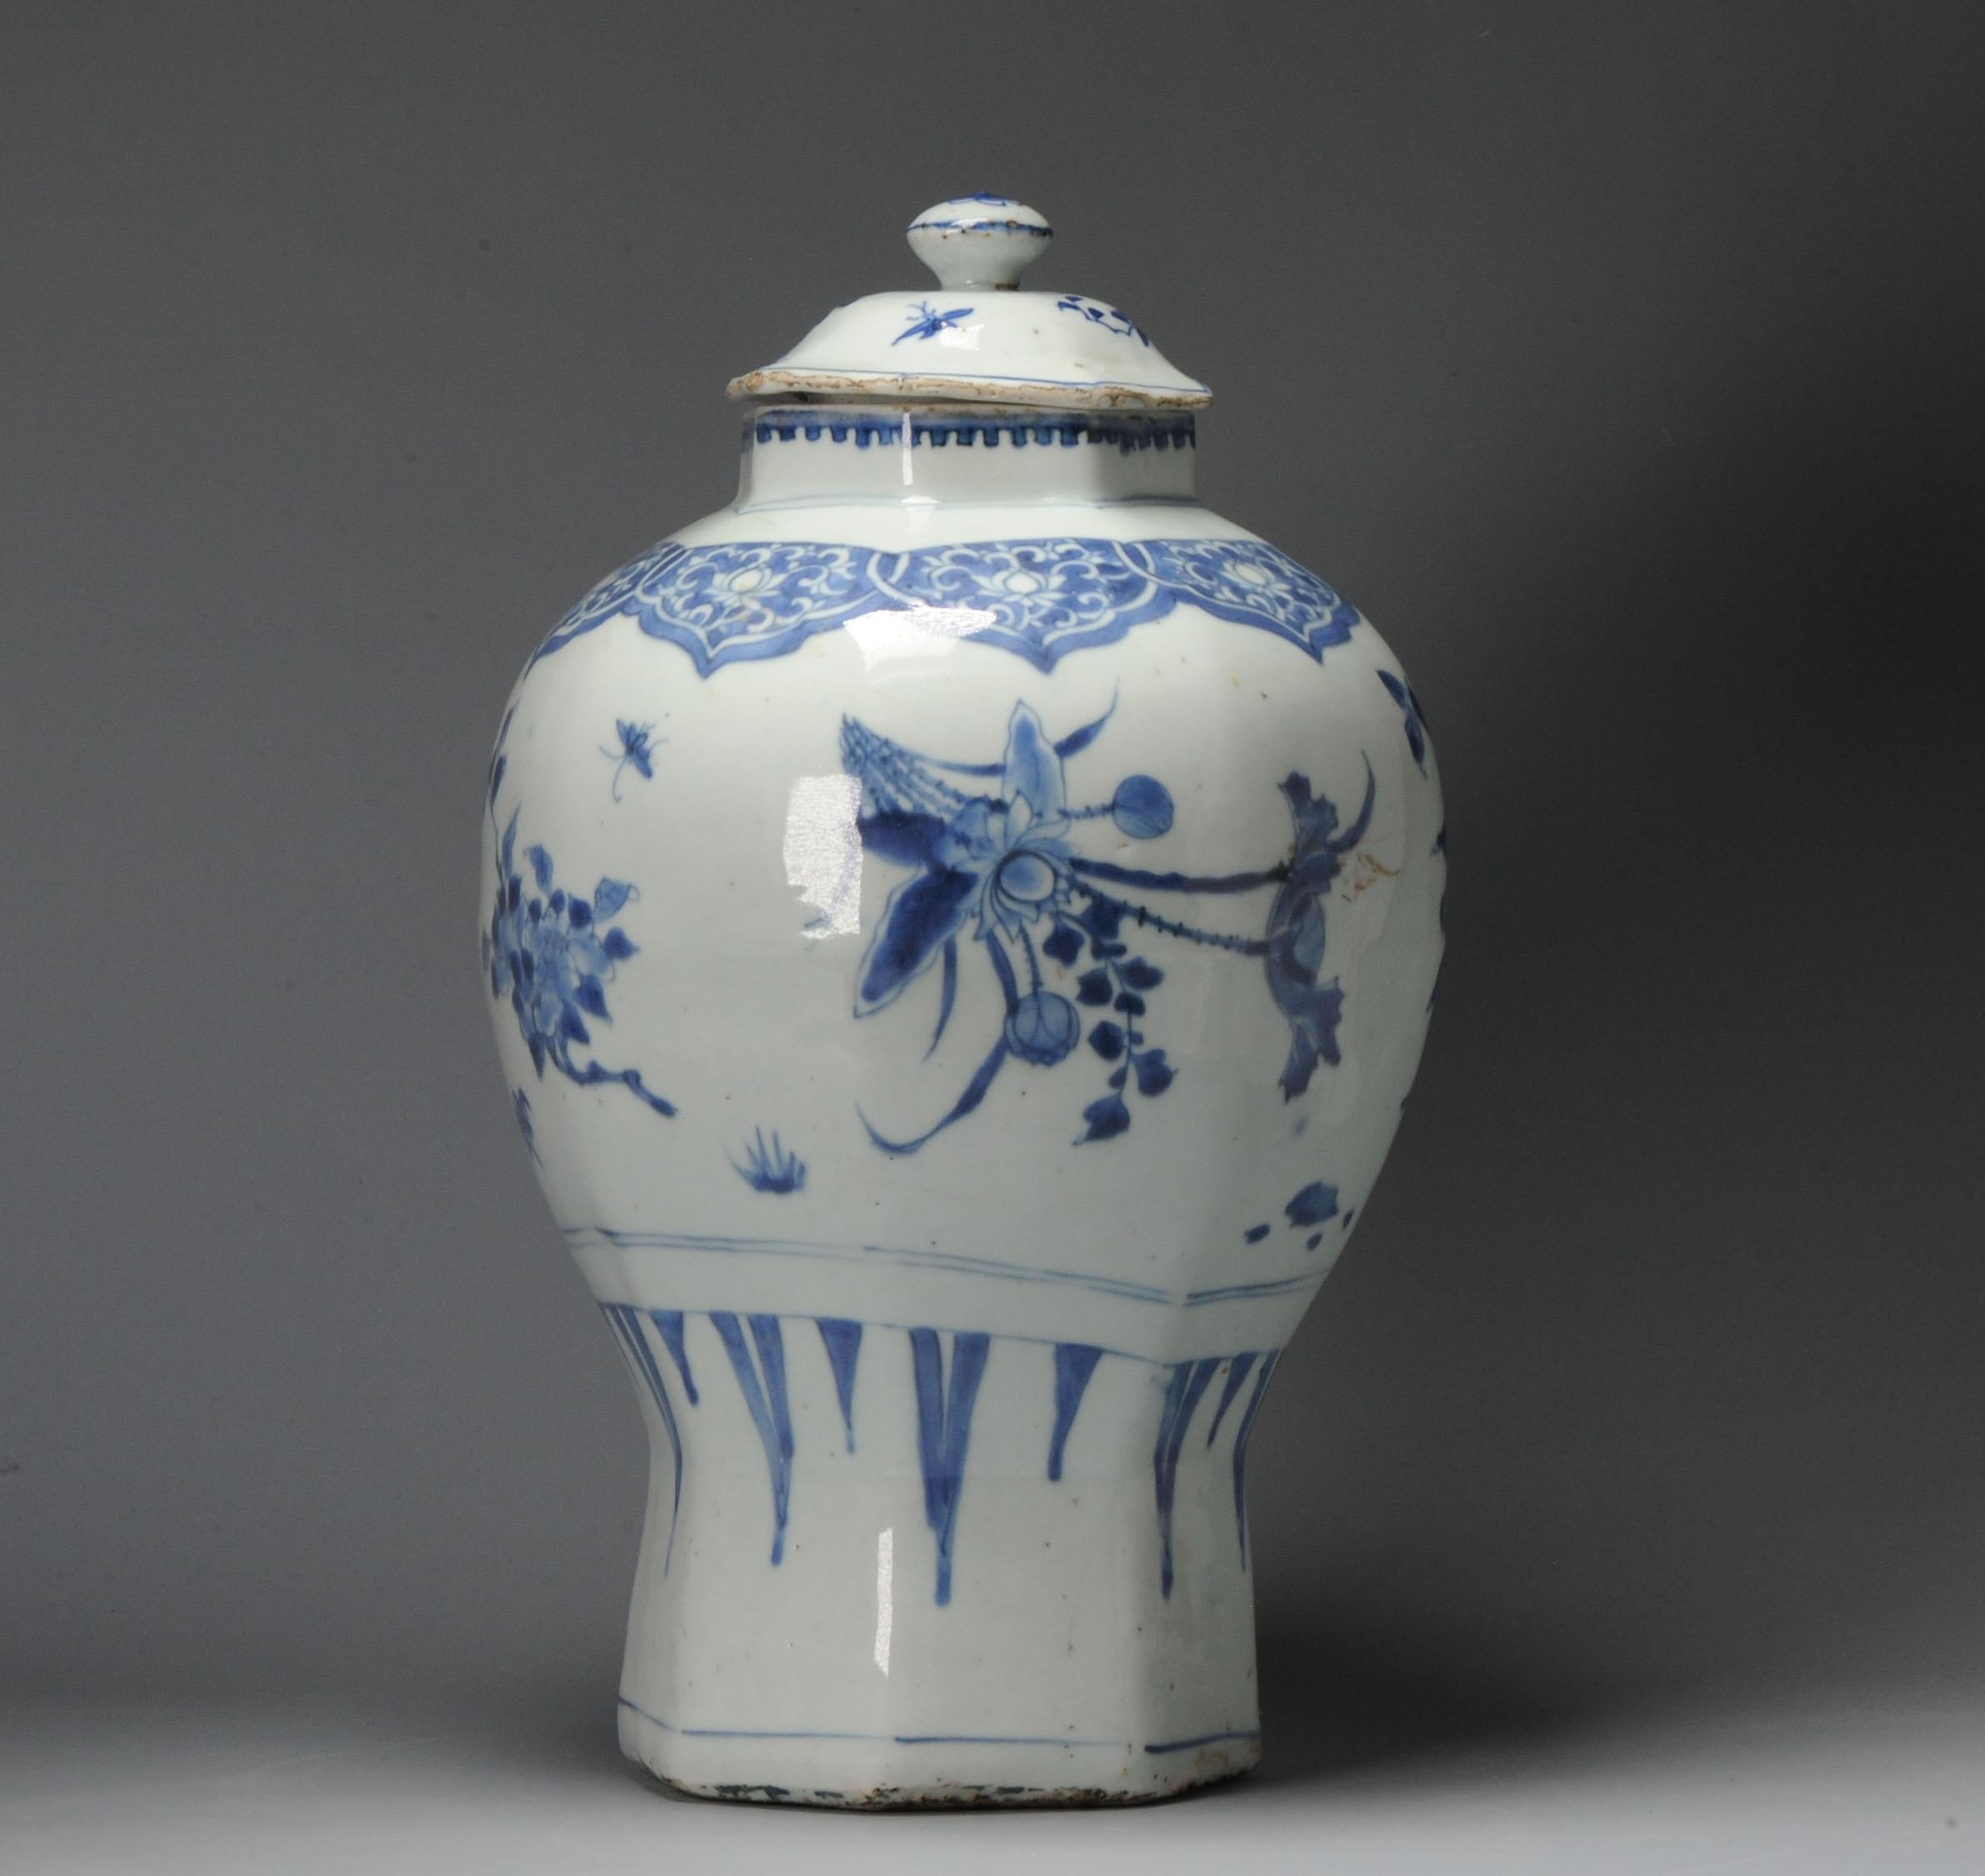 Rare Antique 17th C Transitional Chinese Porcelain Lidded Vase / Jar China For Sale 2